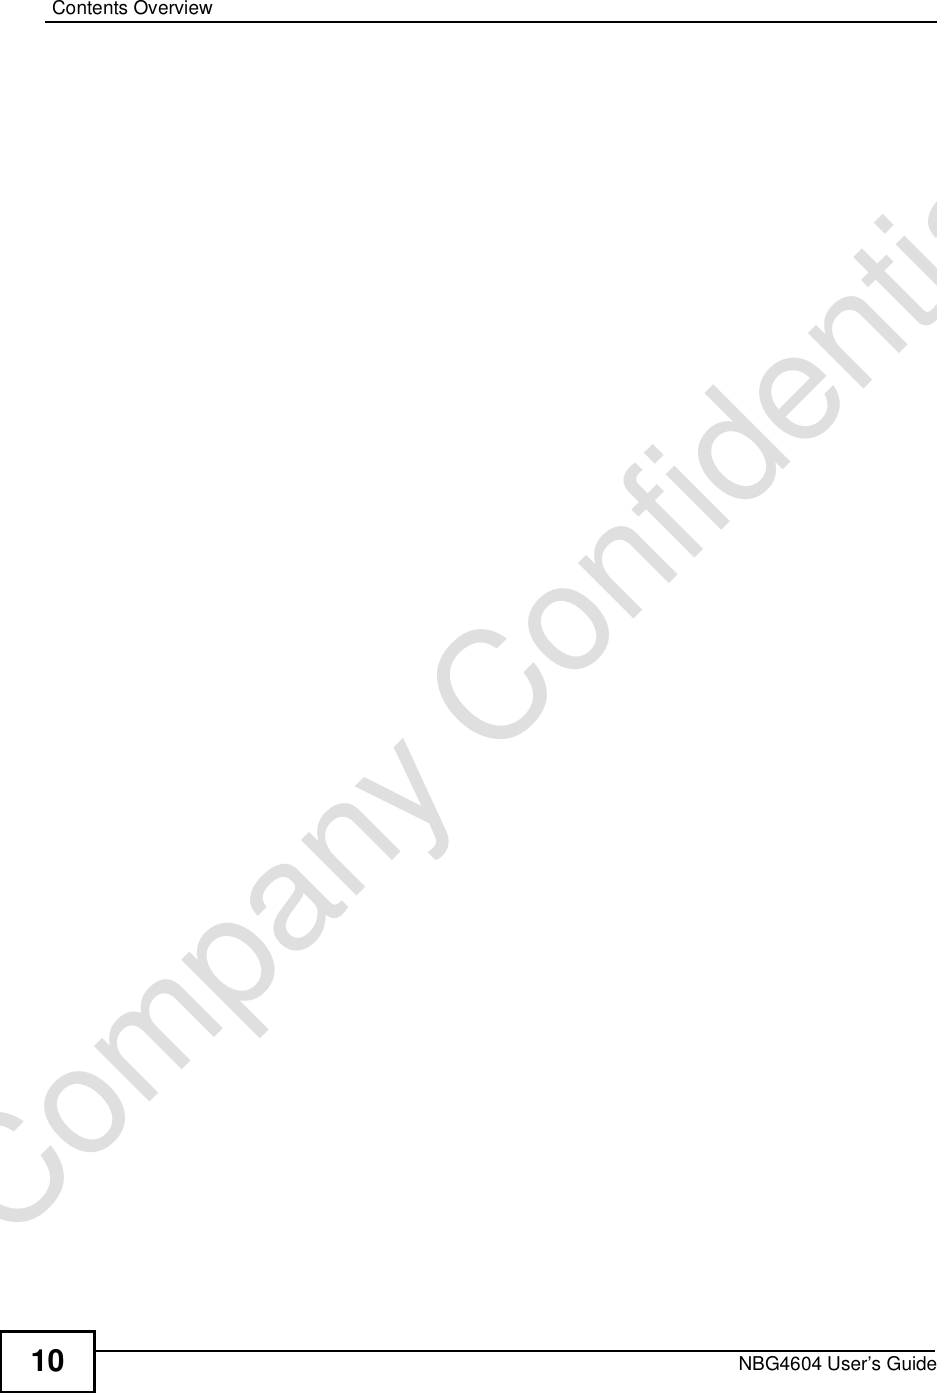 Contents OverviewNBG4604 User’s Guide10Company Confidential